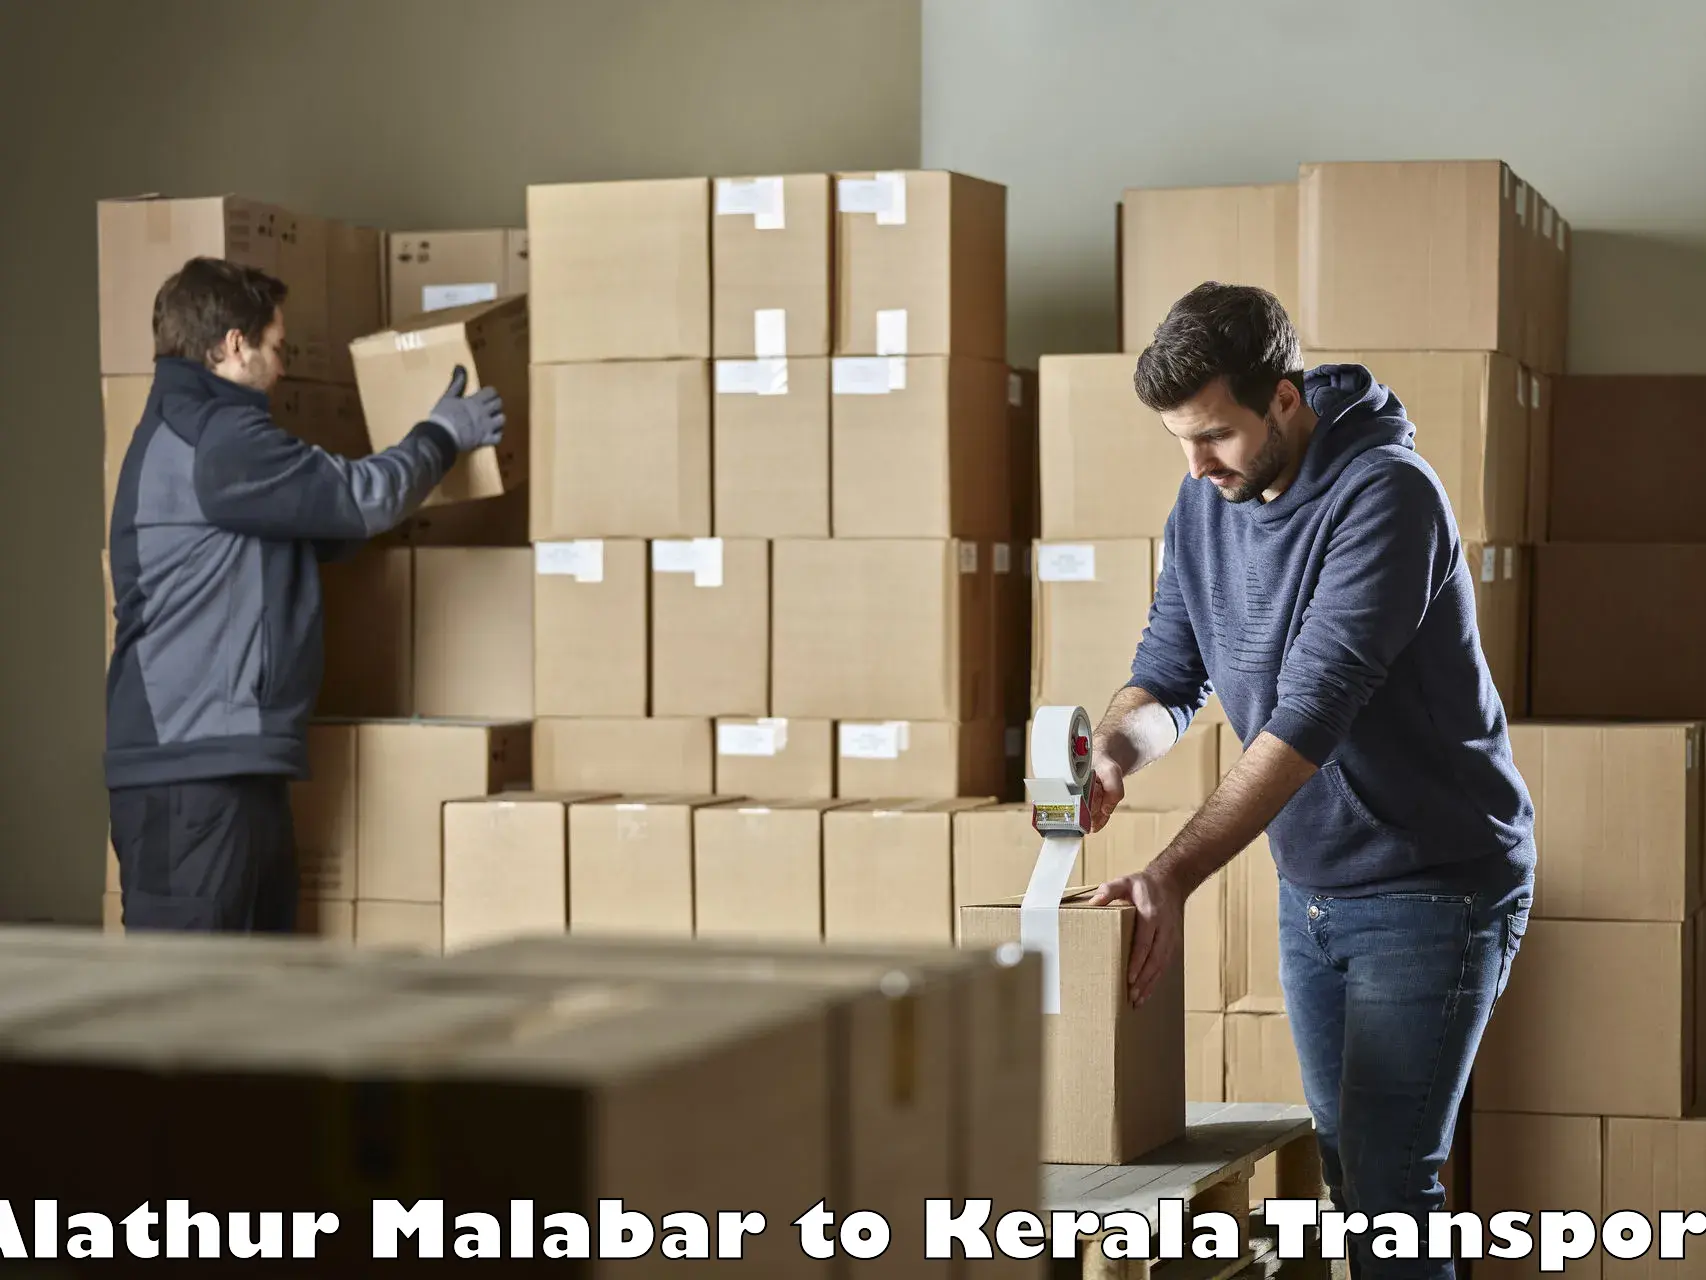 Truck transport companies in India Alathur Malabar to Ernakulam